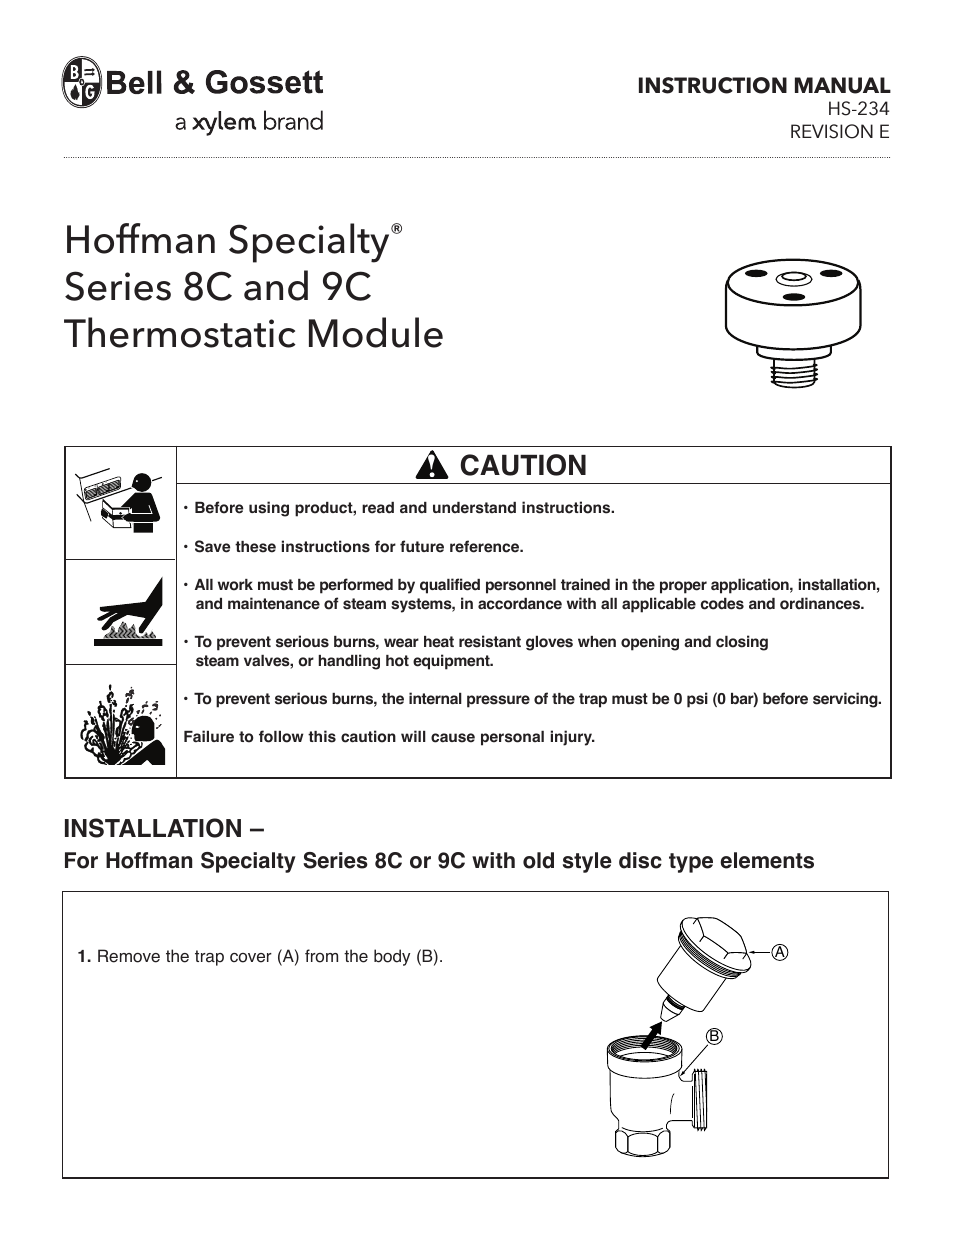 HS 234E Series 9C Thermostatic Module